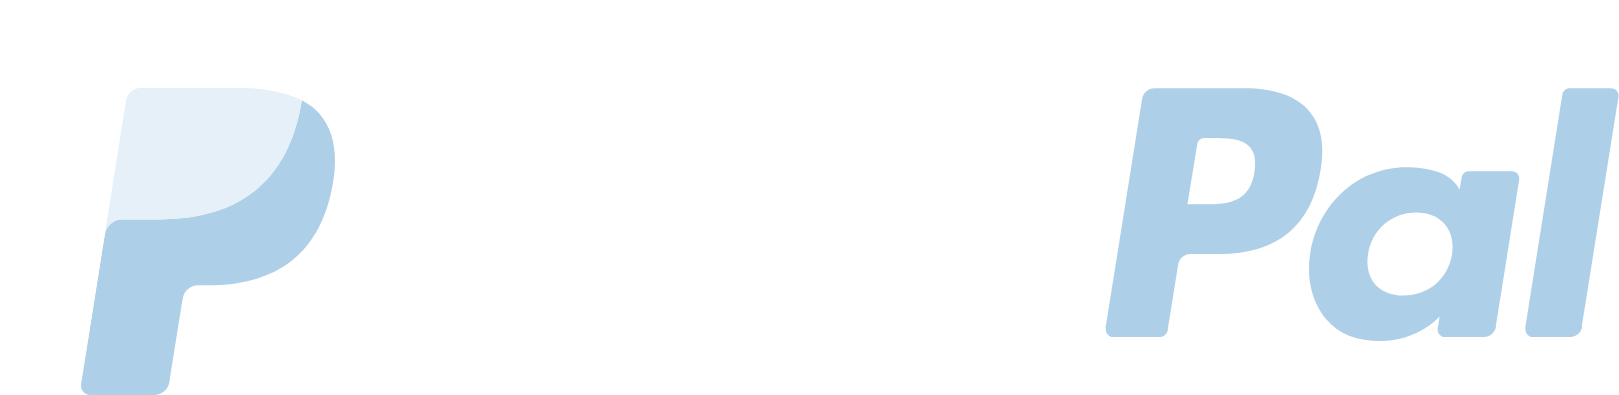 PayPal logo large for dark backgrounds (transparent PNG)